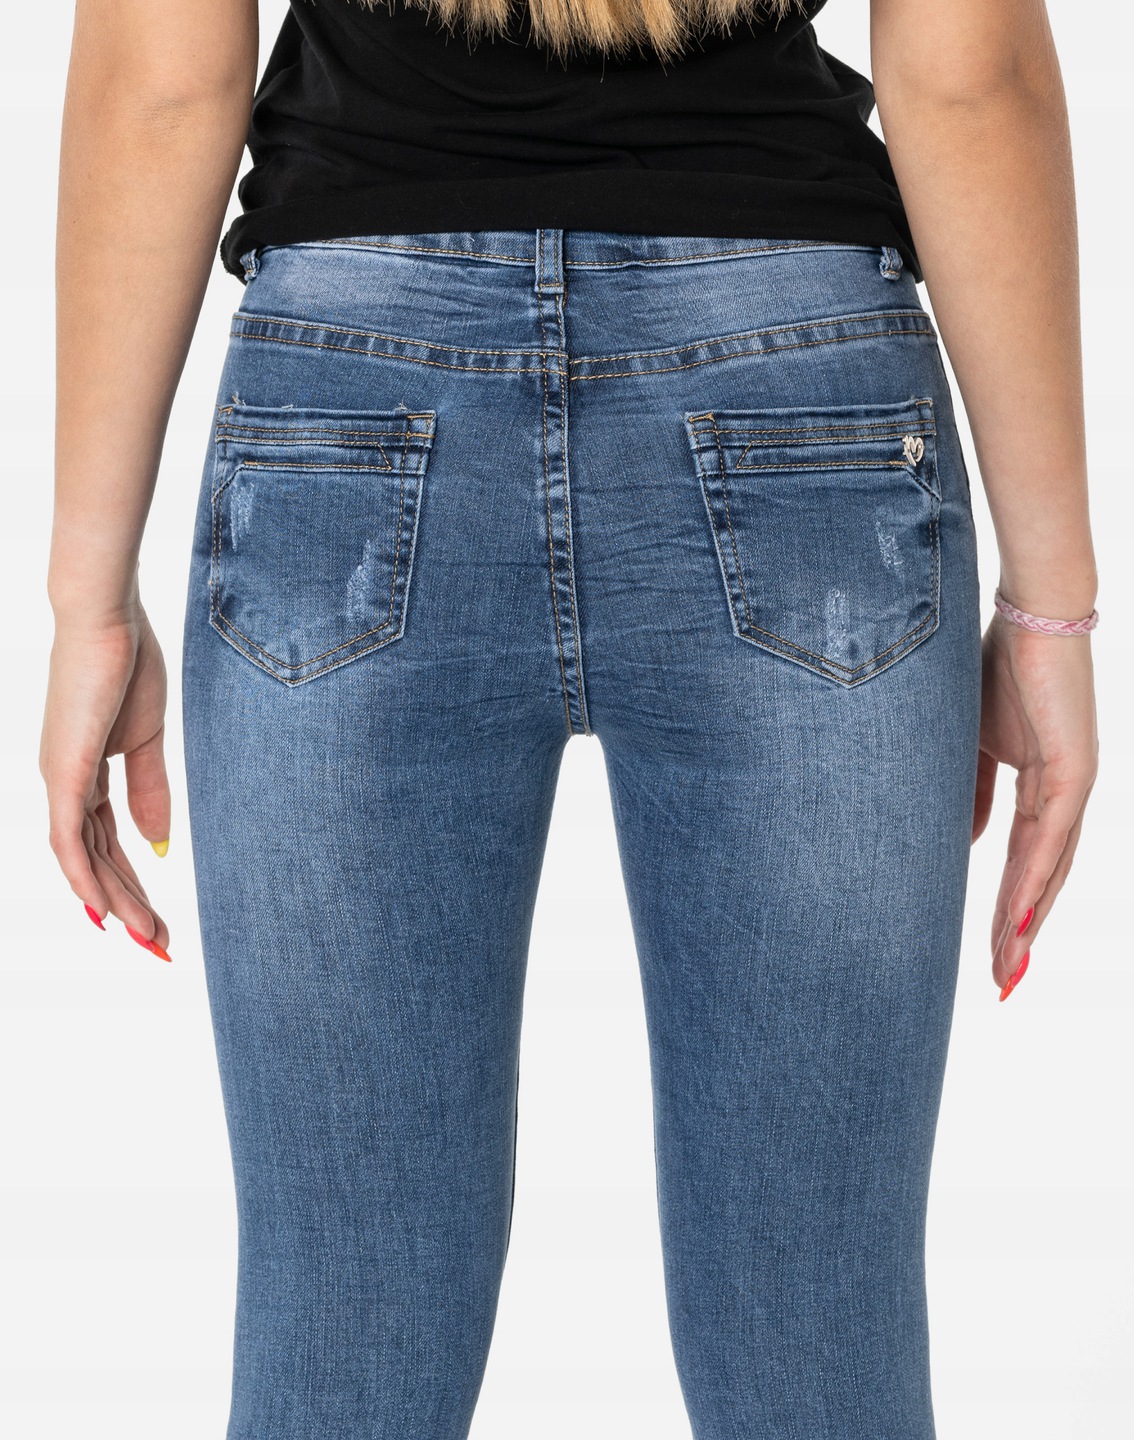 Женские джинсы с дырками S5586 R 31 Gender Women